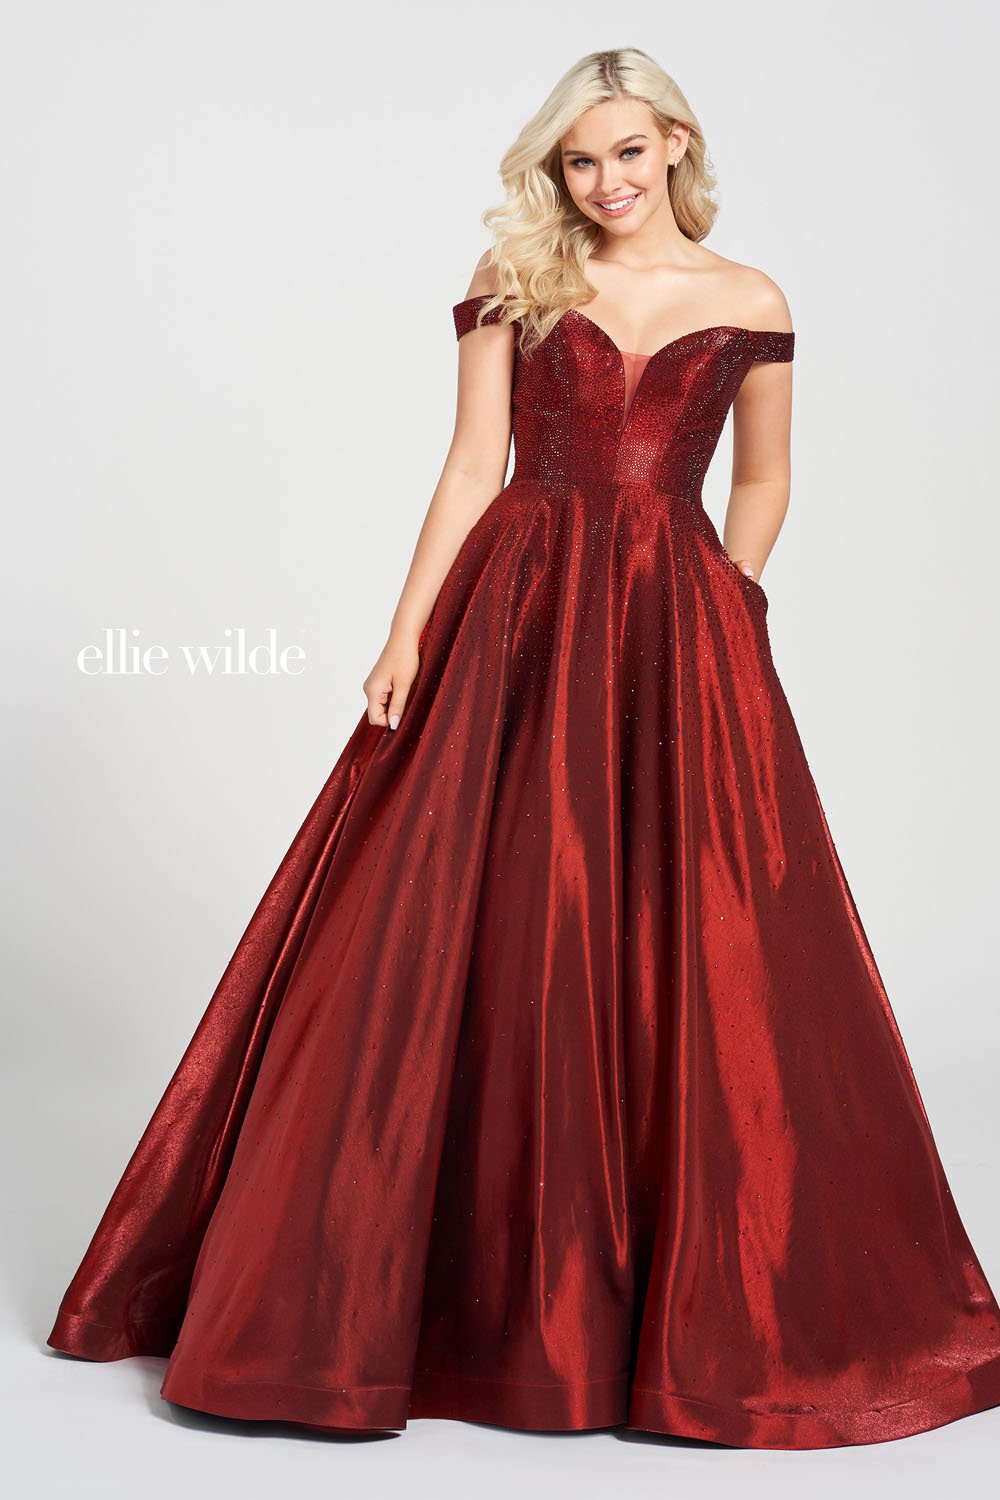 Ellie Wilde Wine EW122106 Prom Dress Image.  Wine formal dress.